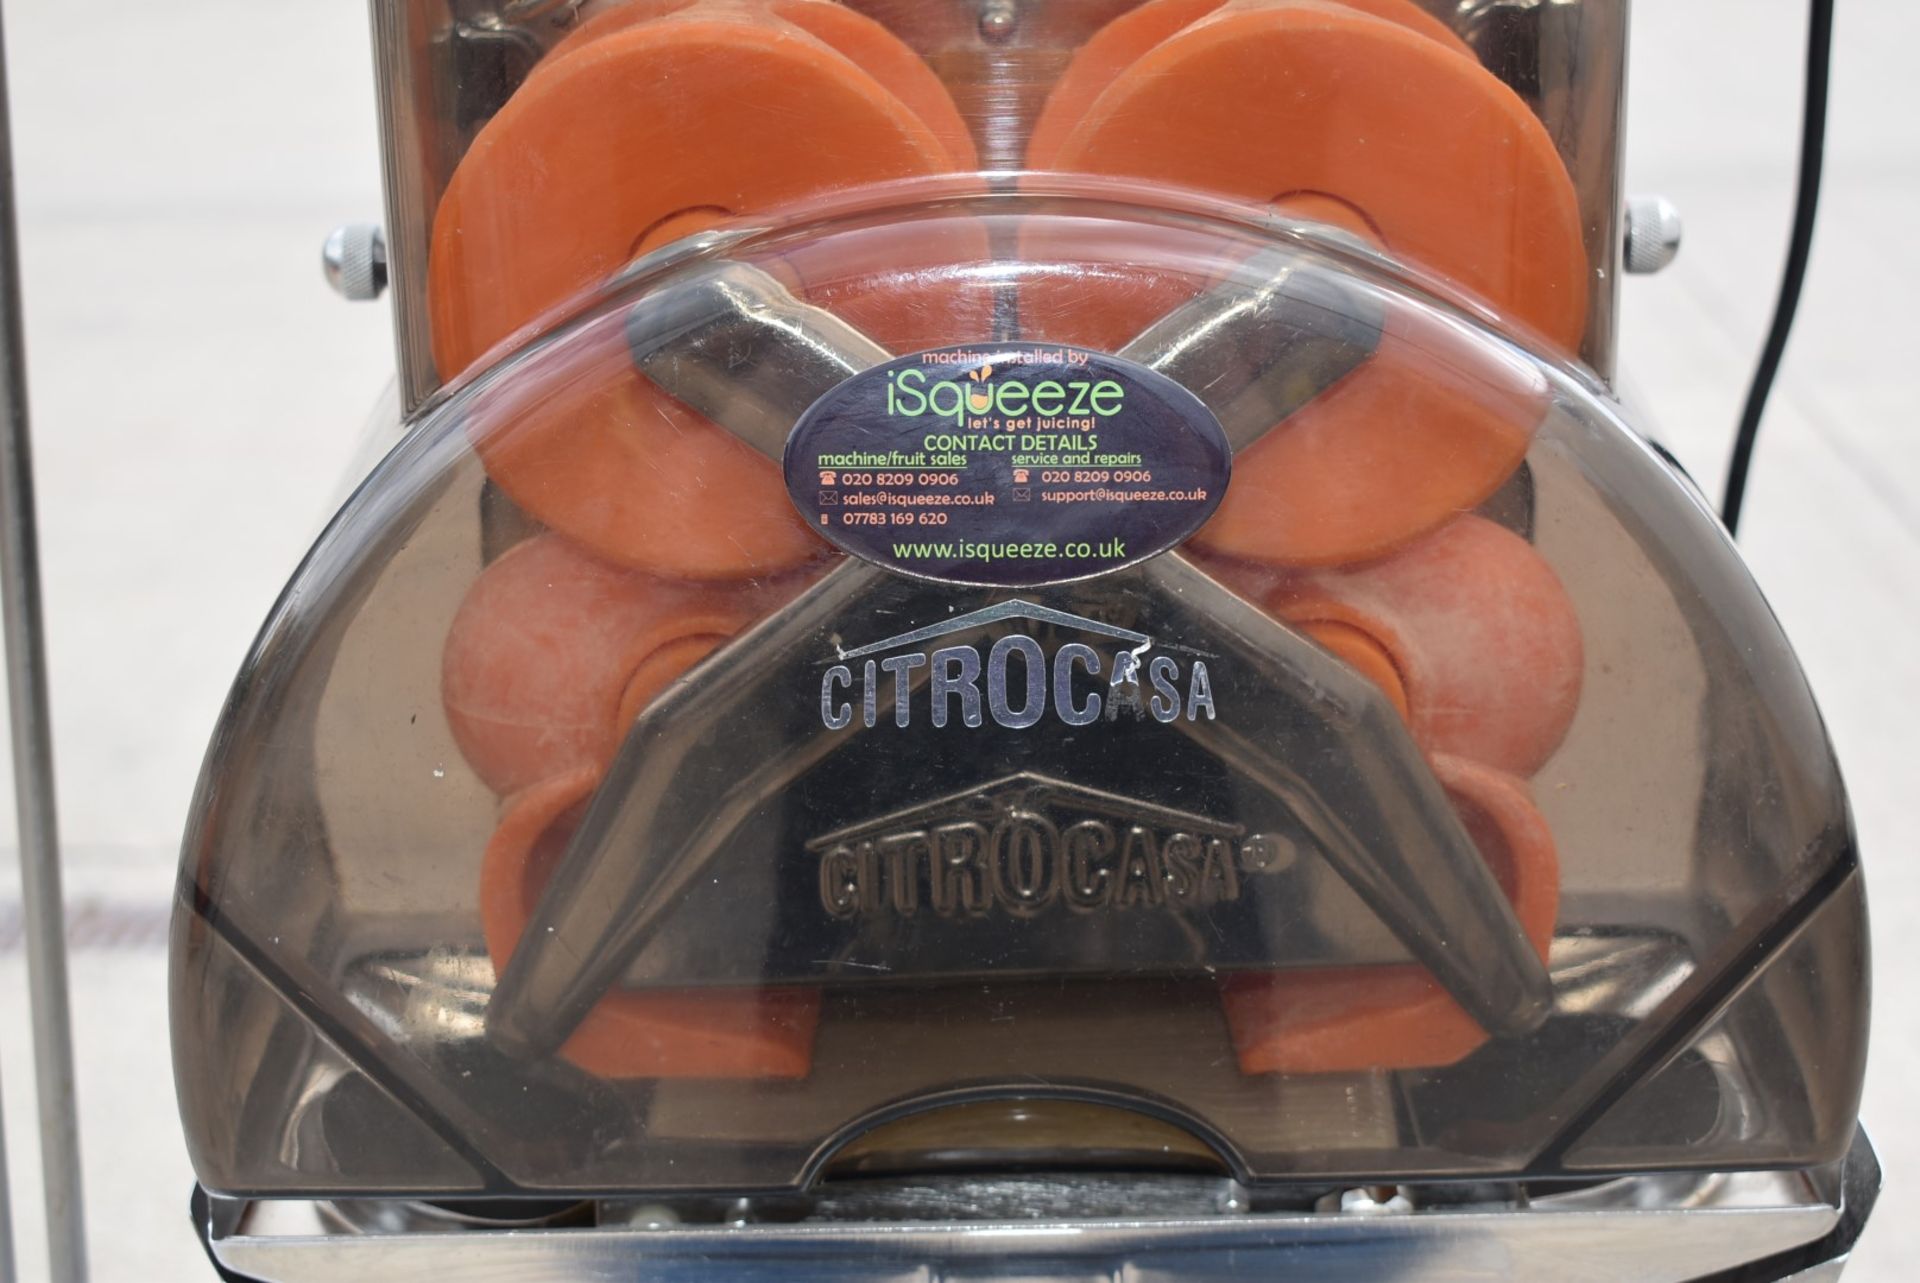 1 x Citrocasa Commercial Orange Juicer - Model Fantastic ATS - Auto Fruit Feeding Juicer RRP £7,900 - Image 18 of 25